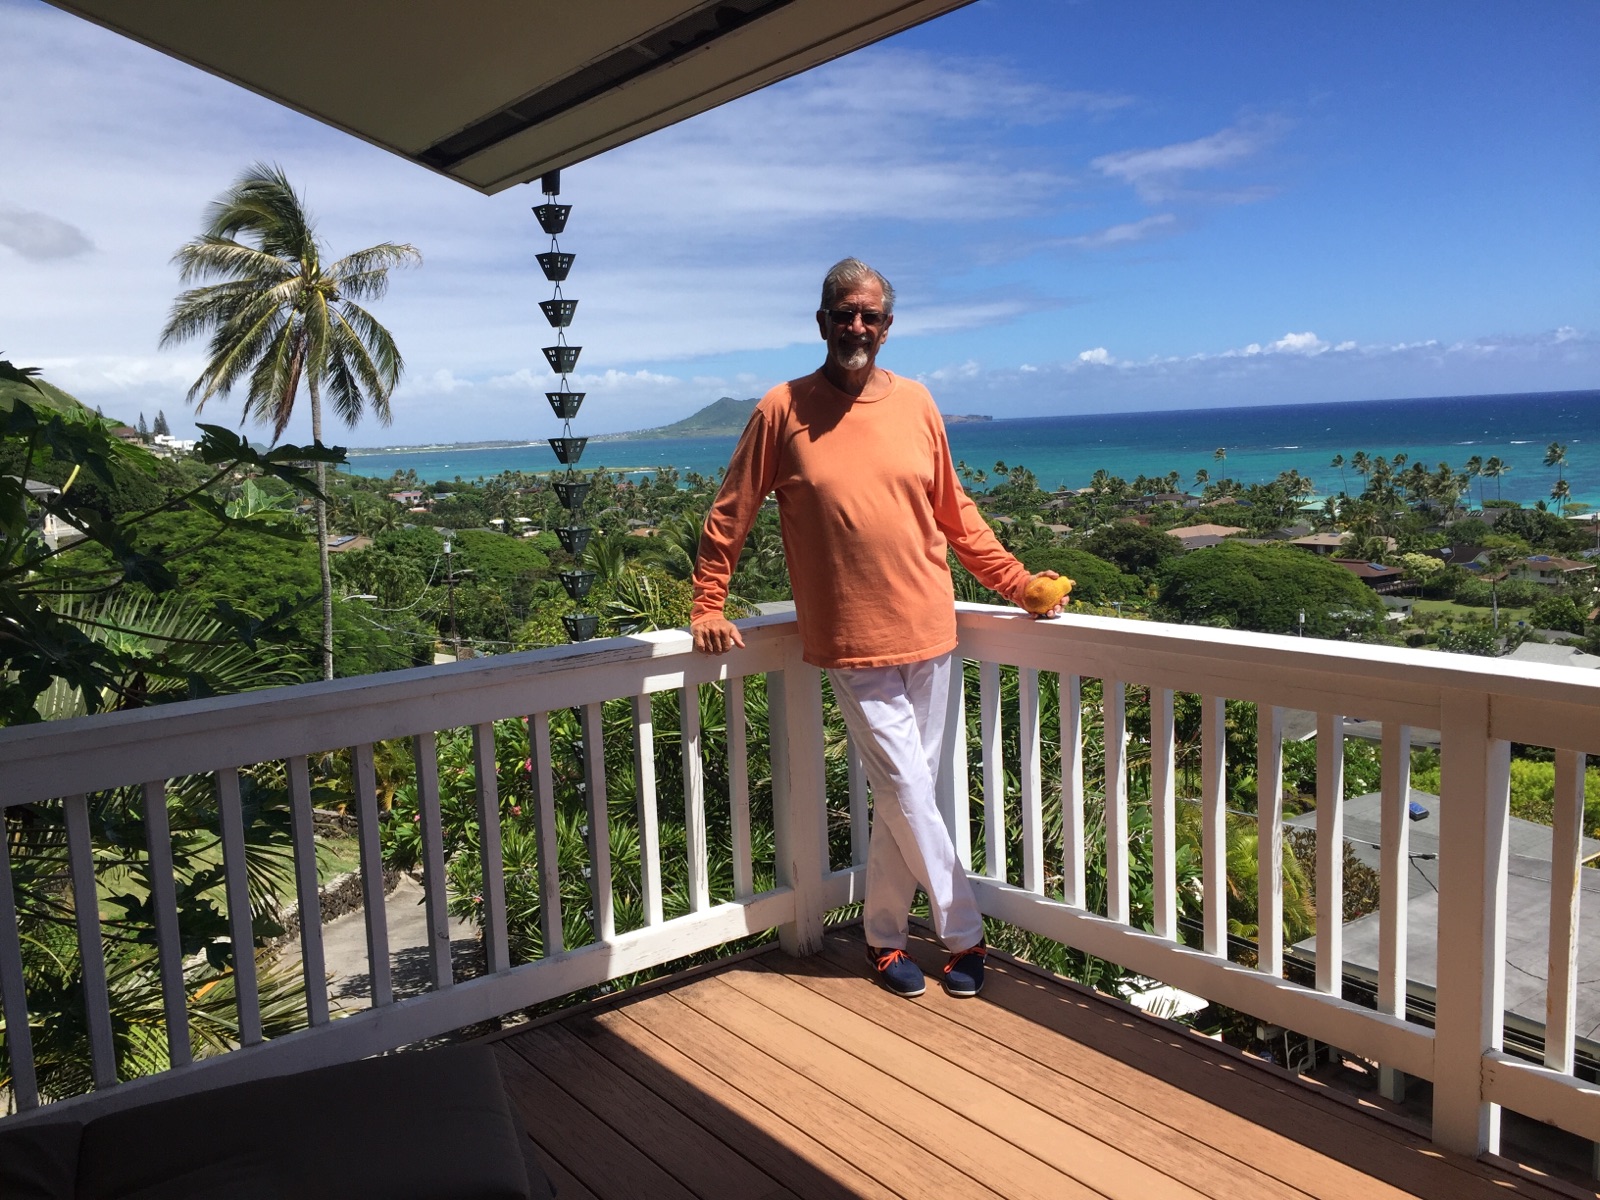 My casual look overlooking the Kailua beach.